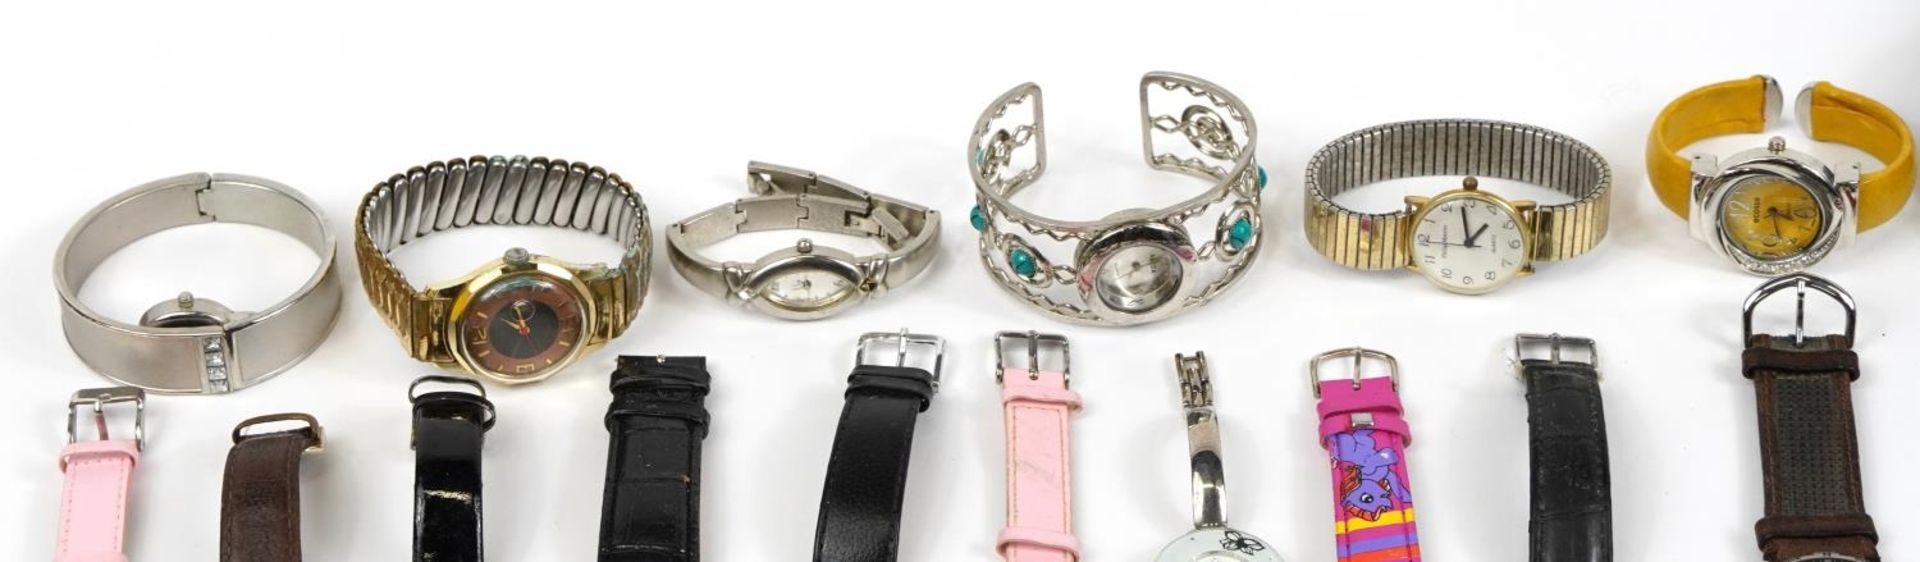 Vintage and later ladies and gentlemen's wristwatches including Casio, Seiko, Sekonda, Pulsar and - Bild 2 aus 6